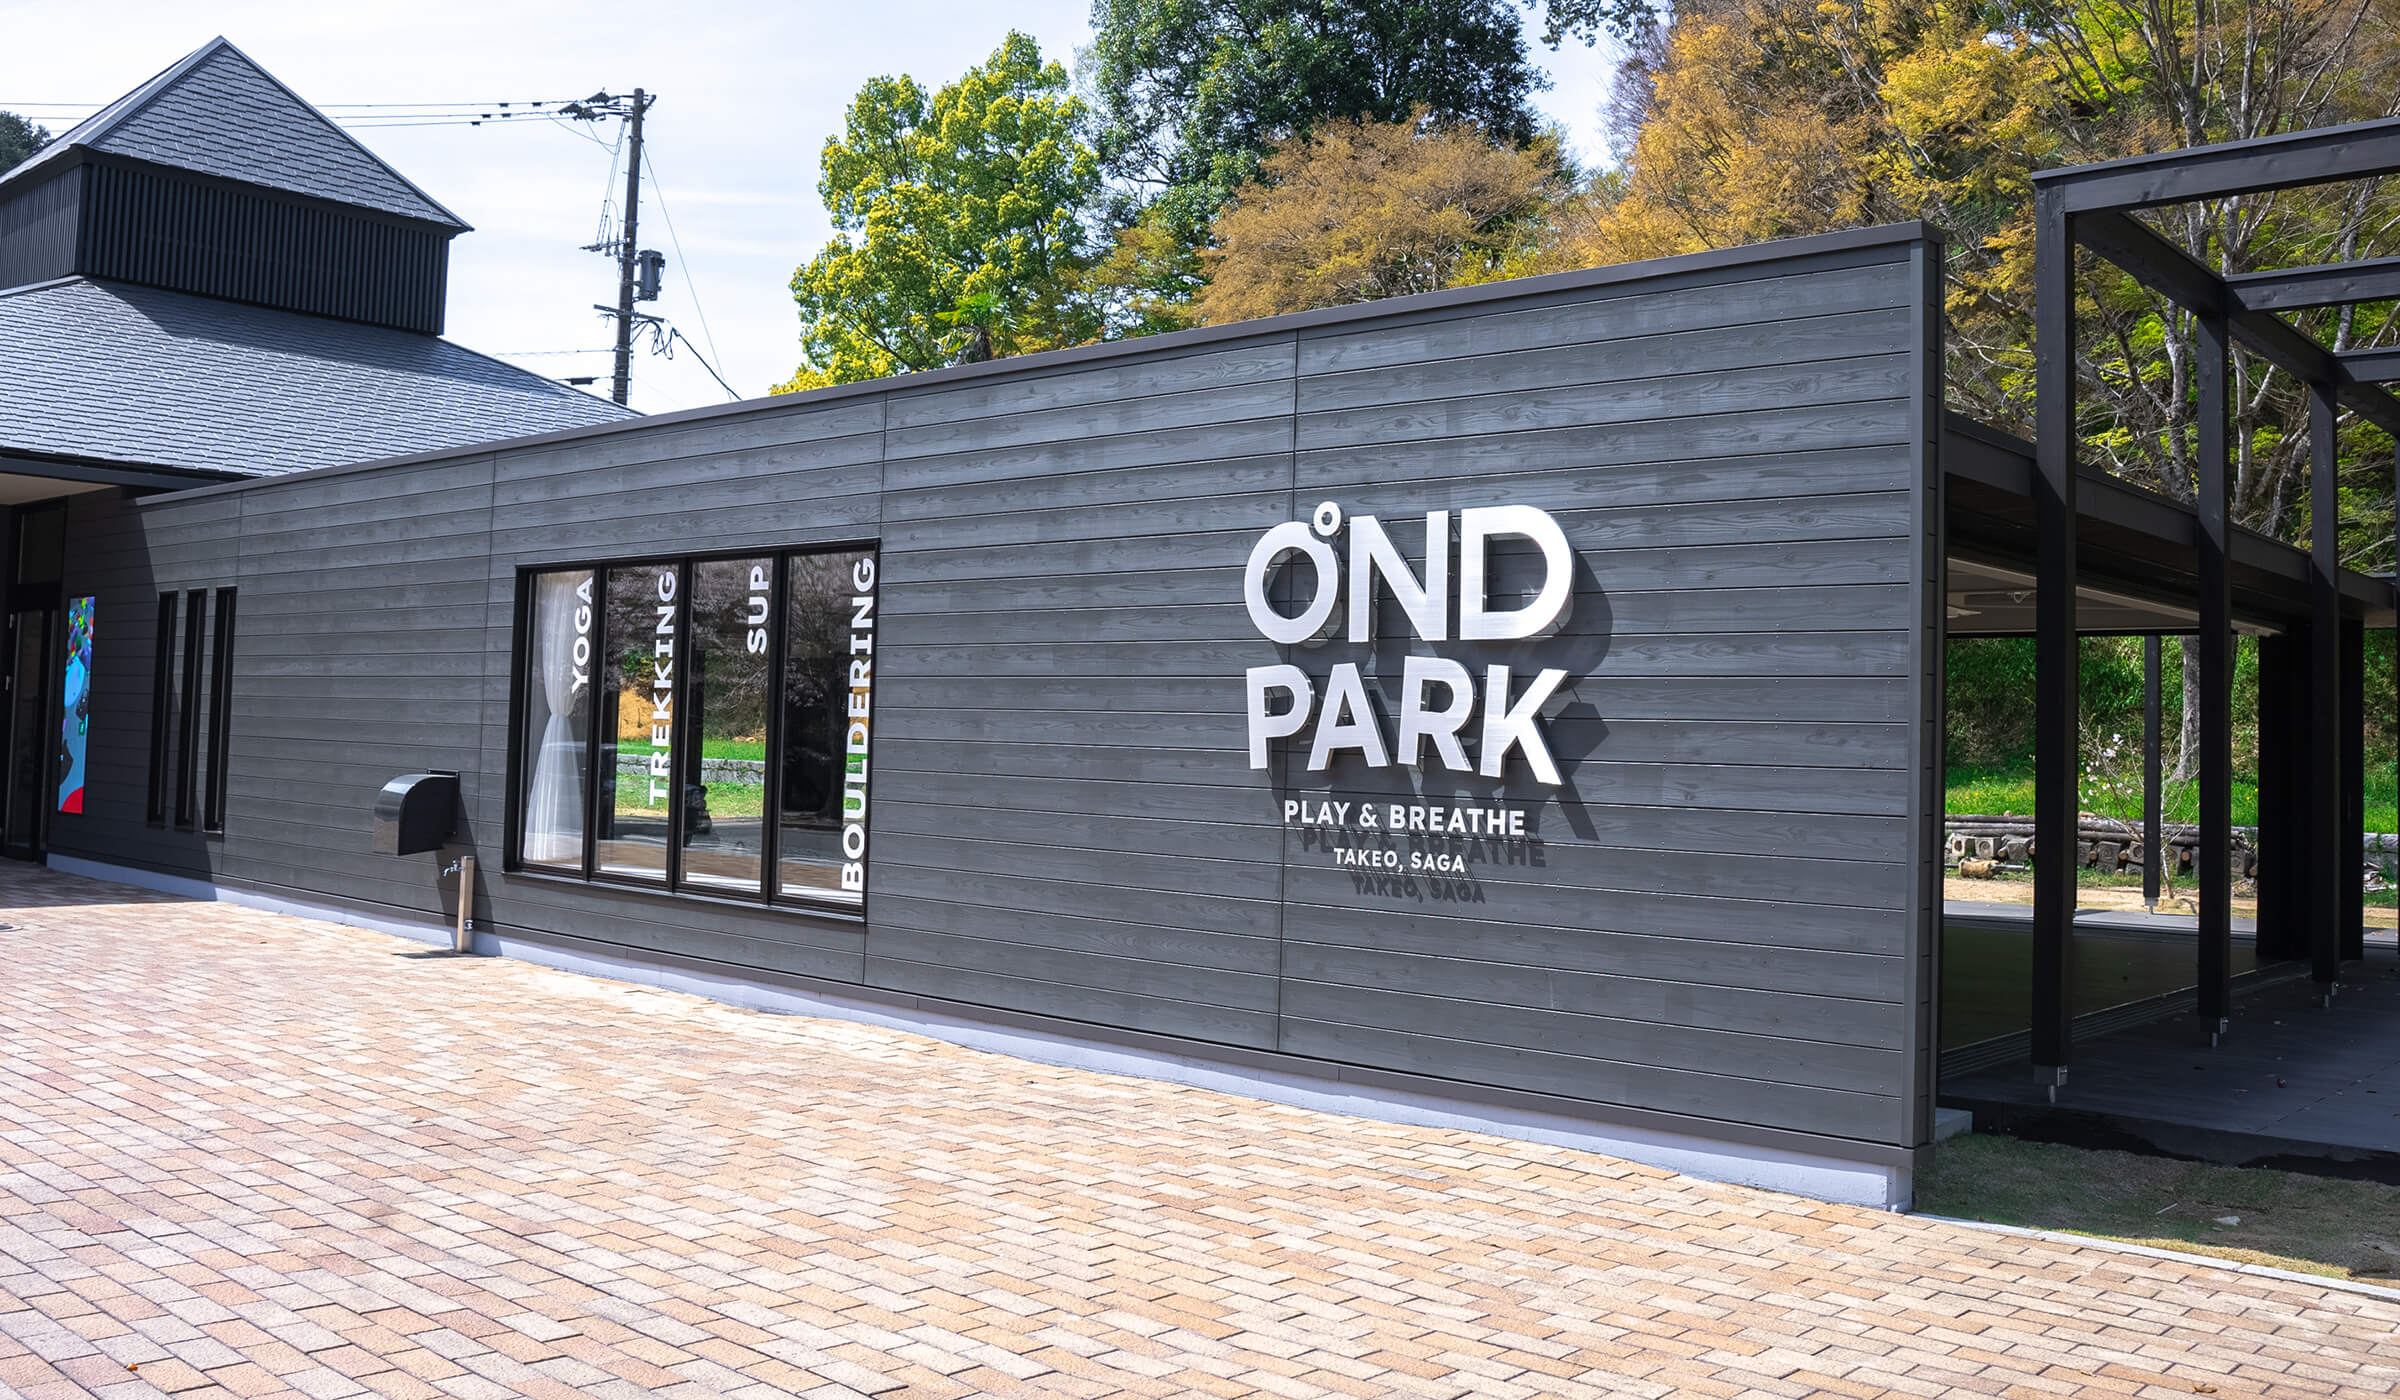 “OND PARK” Branding Project in Takeo, Saga